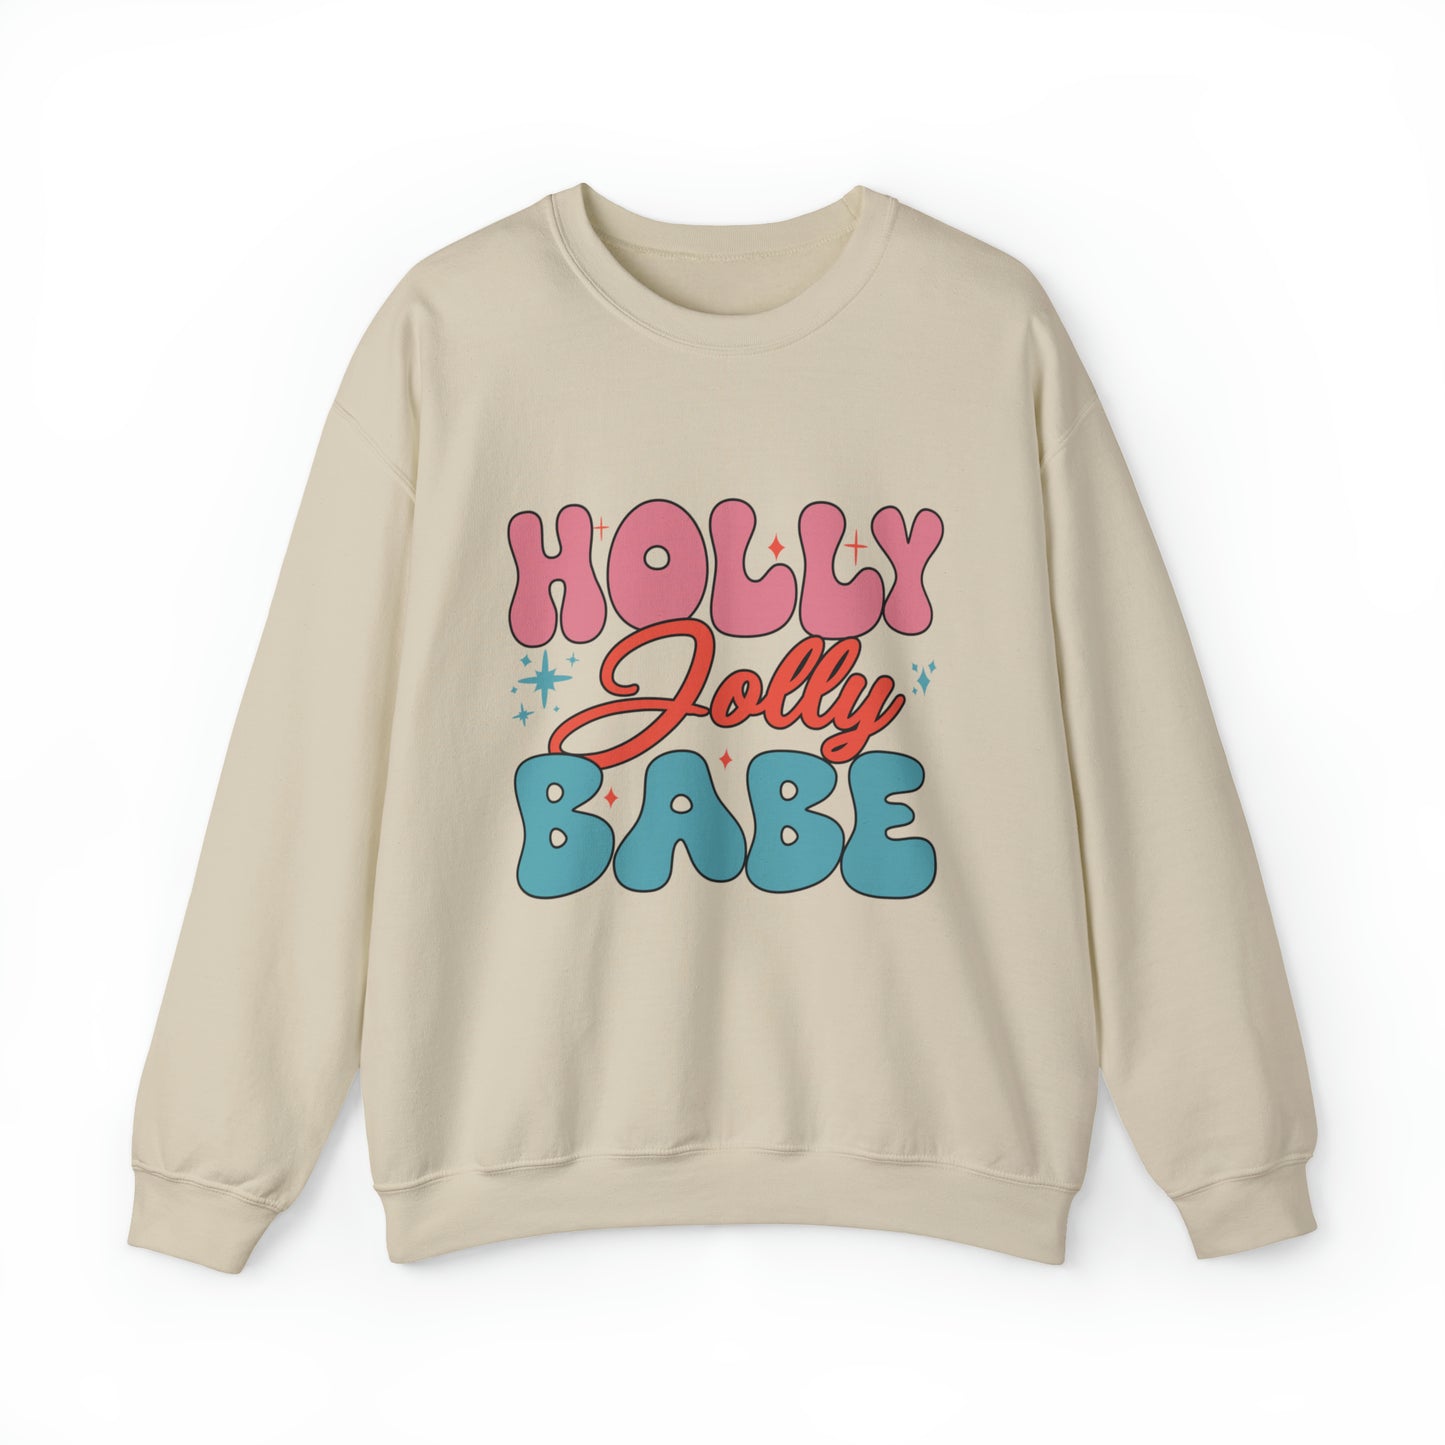 Holly Jolly Babe Women's Funny Christmas Holiday Crewneck Sweatshirt